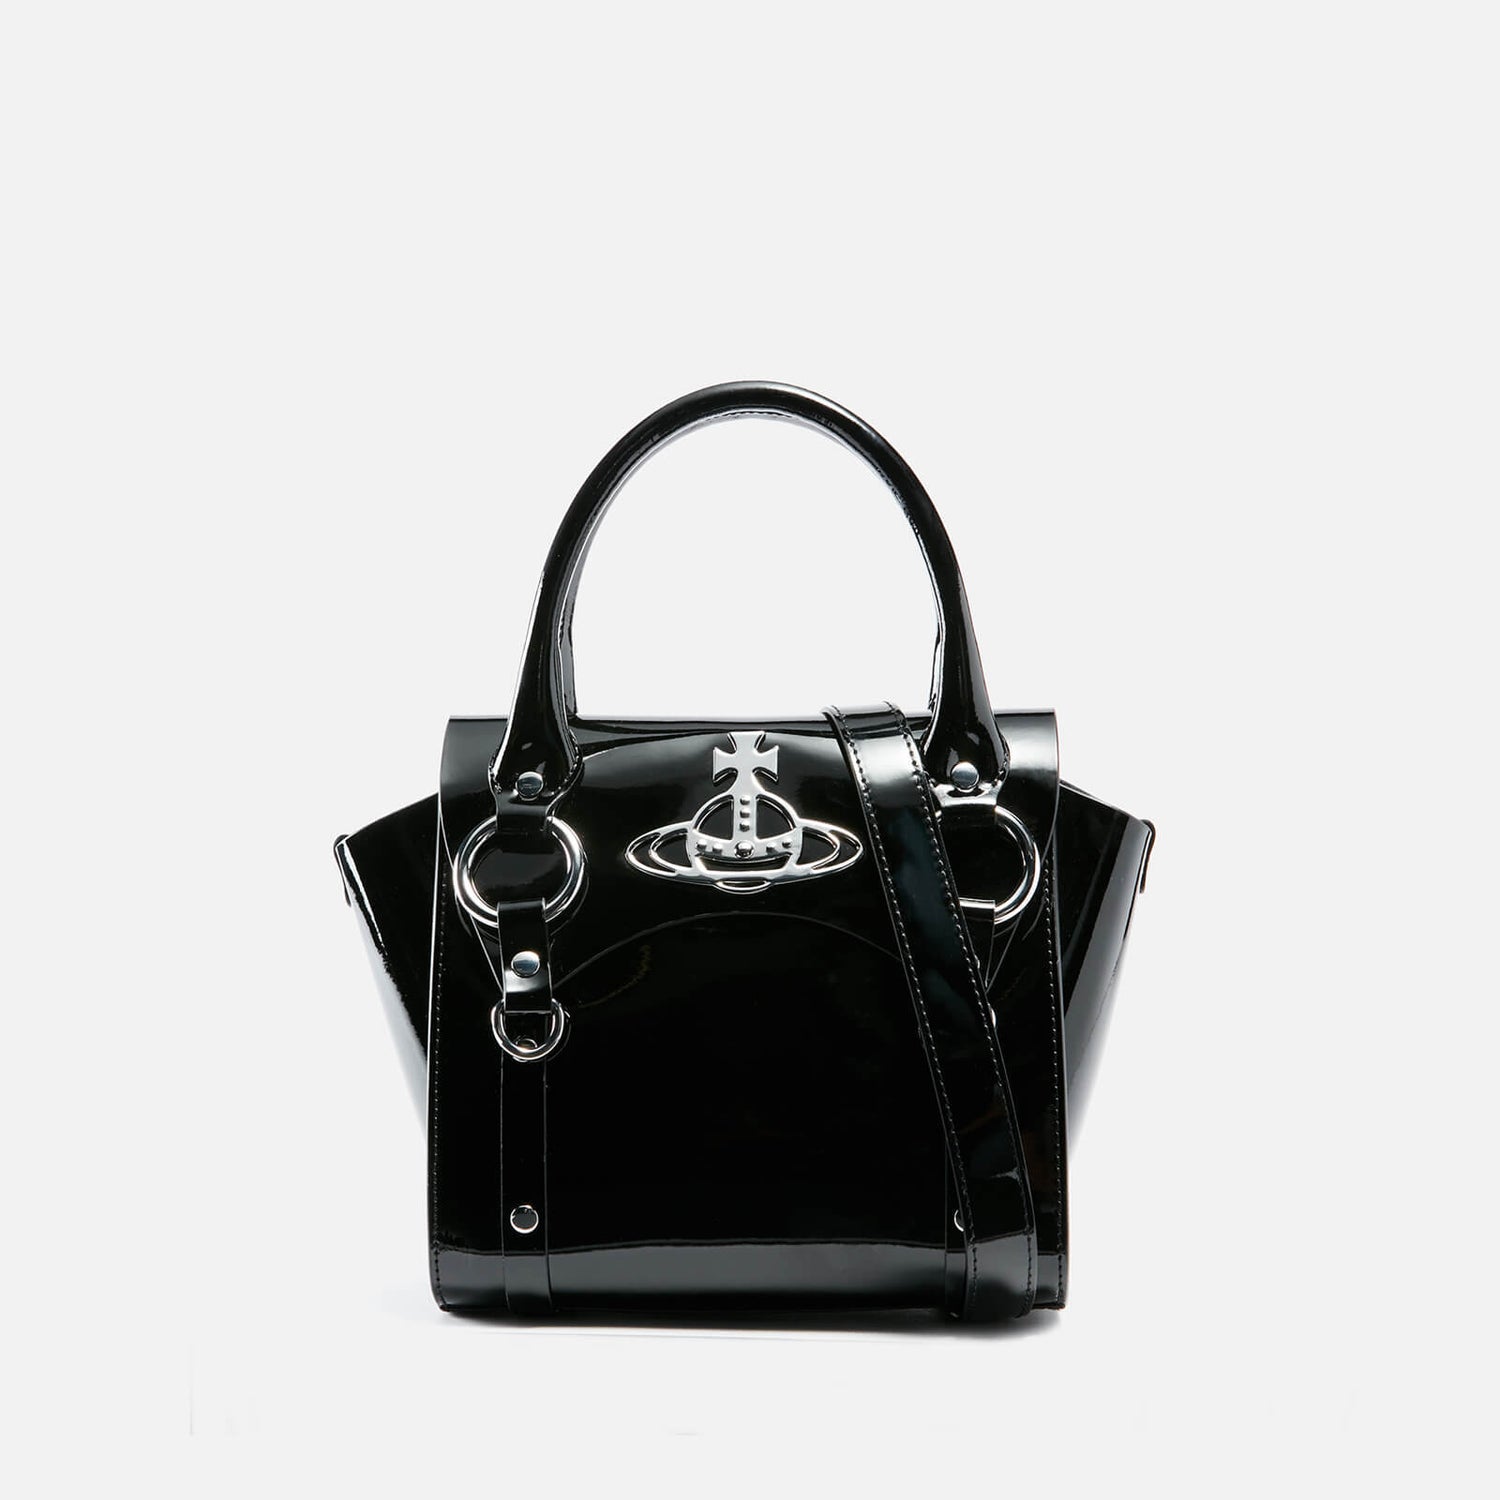 Vivienne Westwood Betty Small Patent Leather Handbag